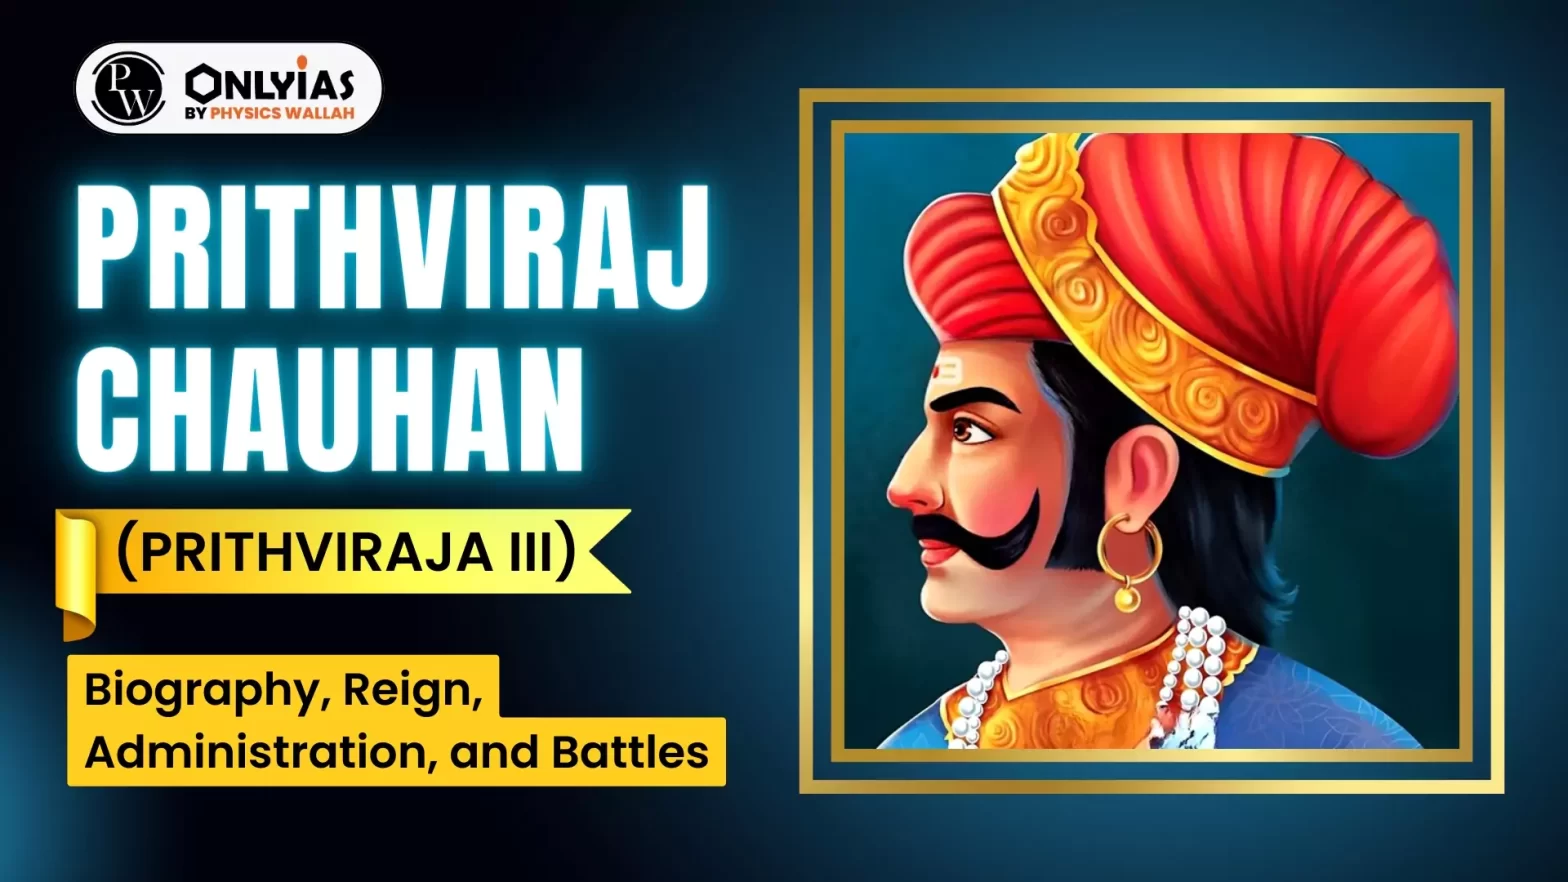 Prithviraj Chauhan (Prithviraj III): Biography, Reign, Administration, and Battles